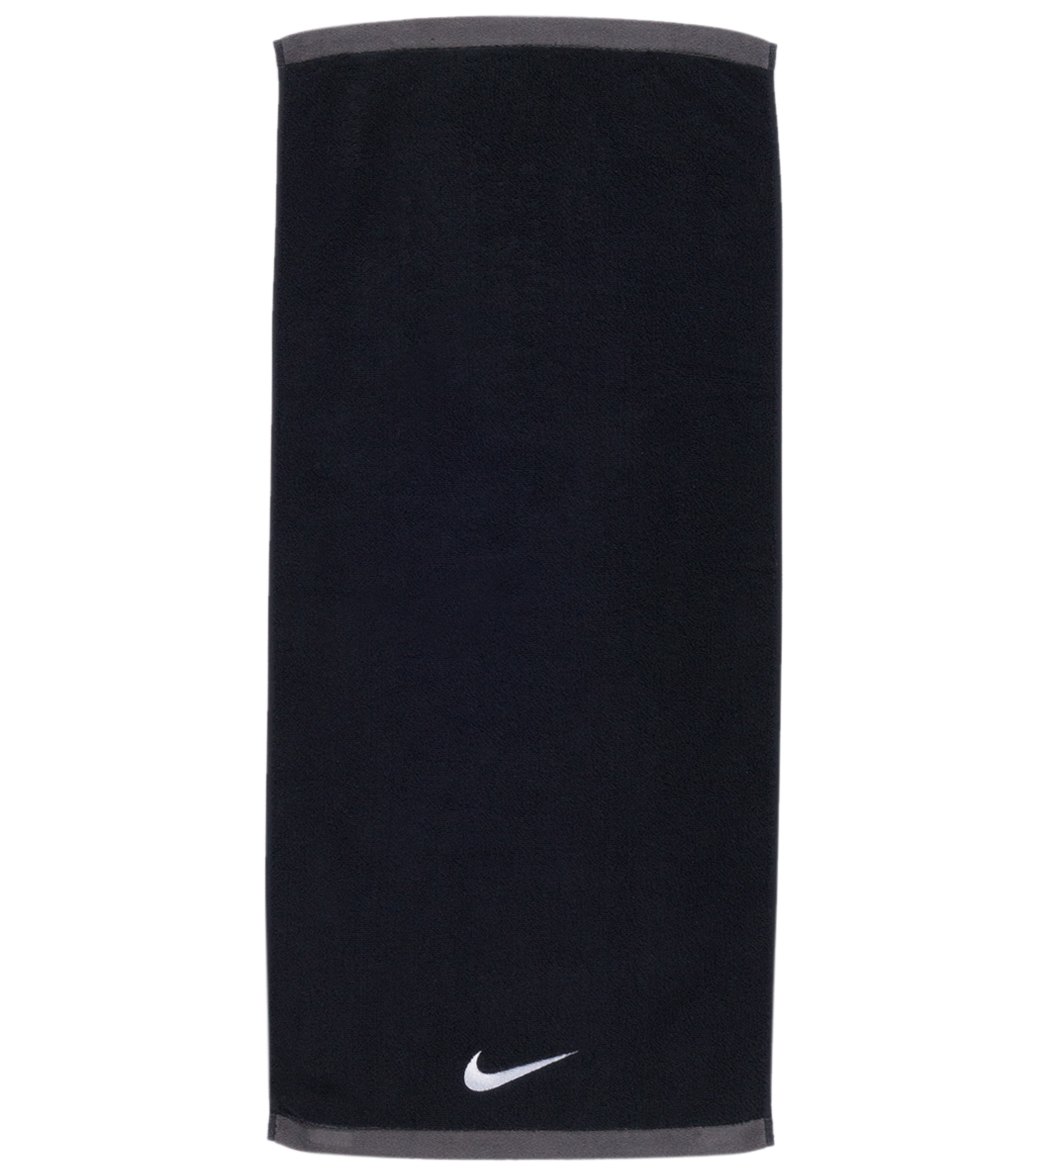 Nike Fundamental Towel 14